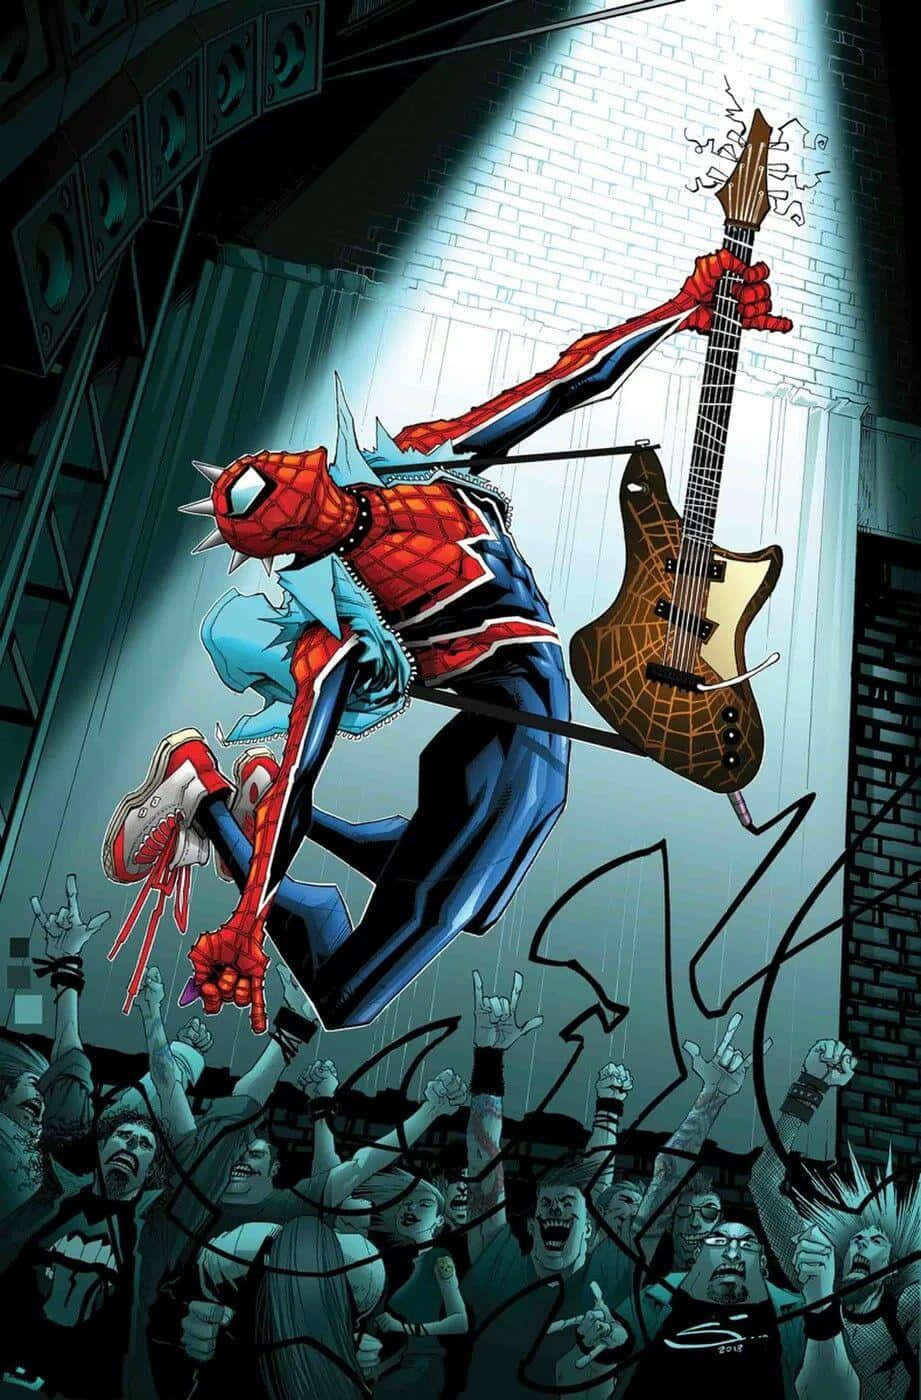 Spider-Geddon: The Ultimate Battle between Spider-Verse Heroes Wallpaper